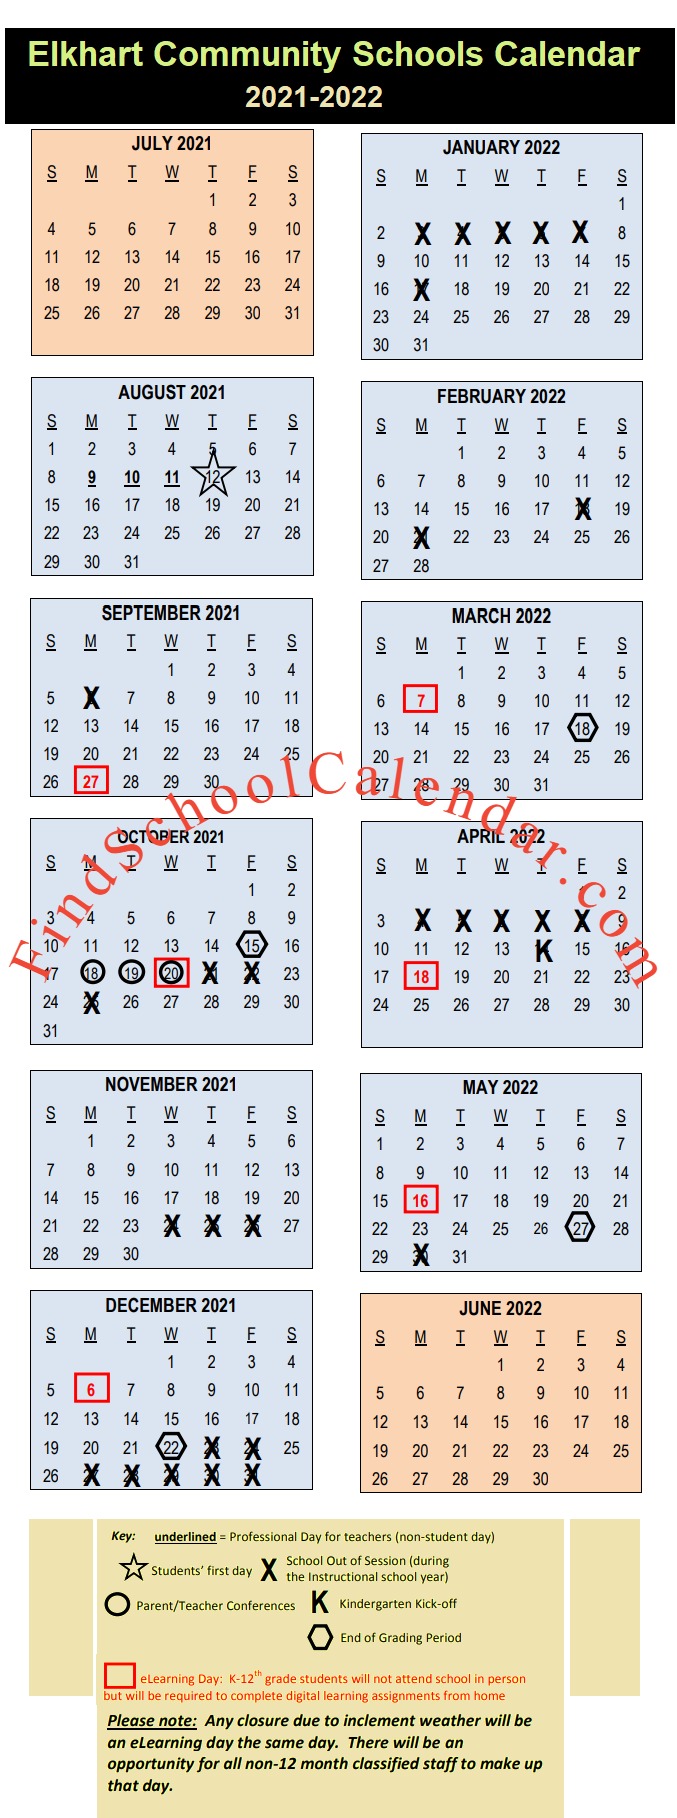 Elkhart Community Schools Calendar 2021 22 Holidays Break Schedule